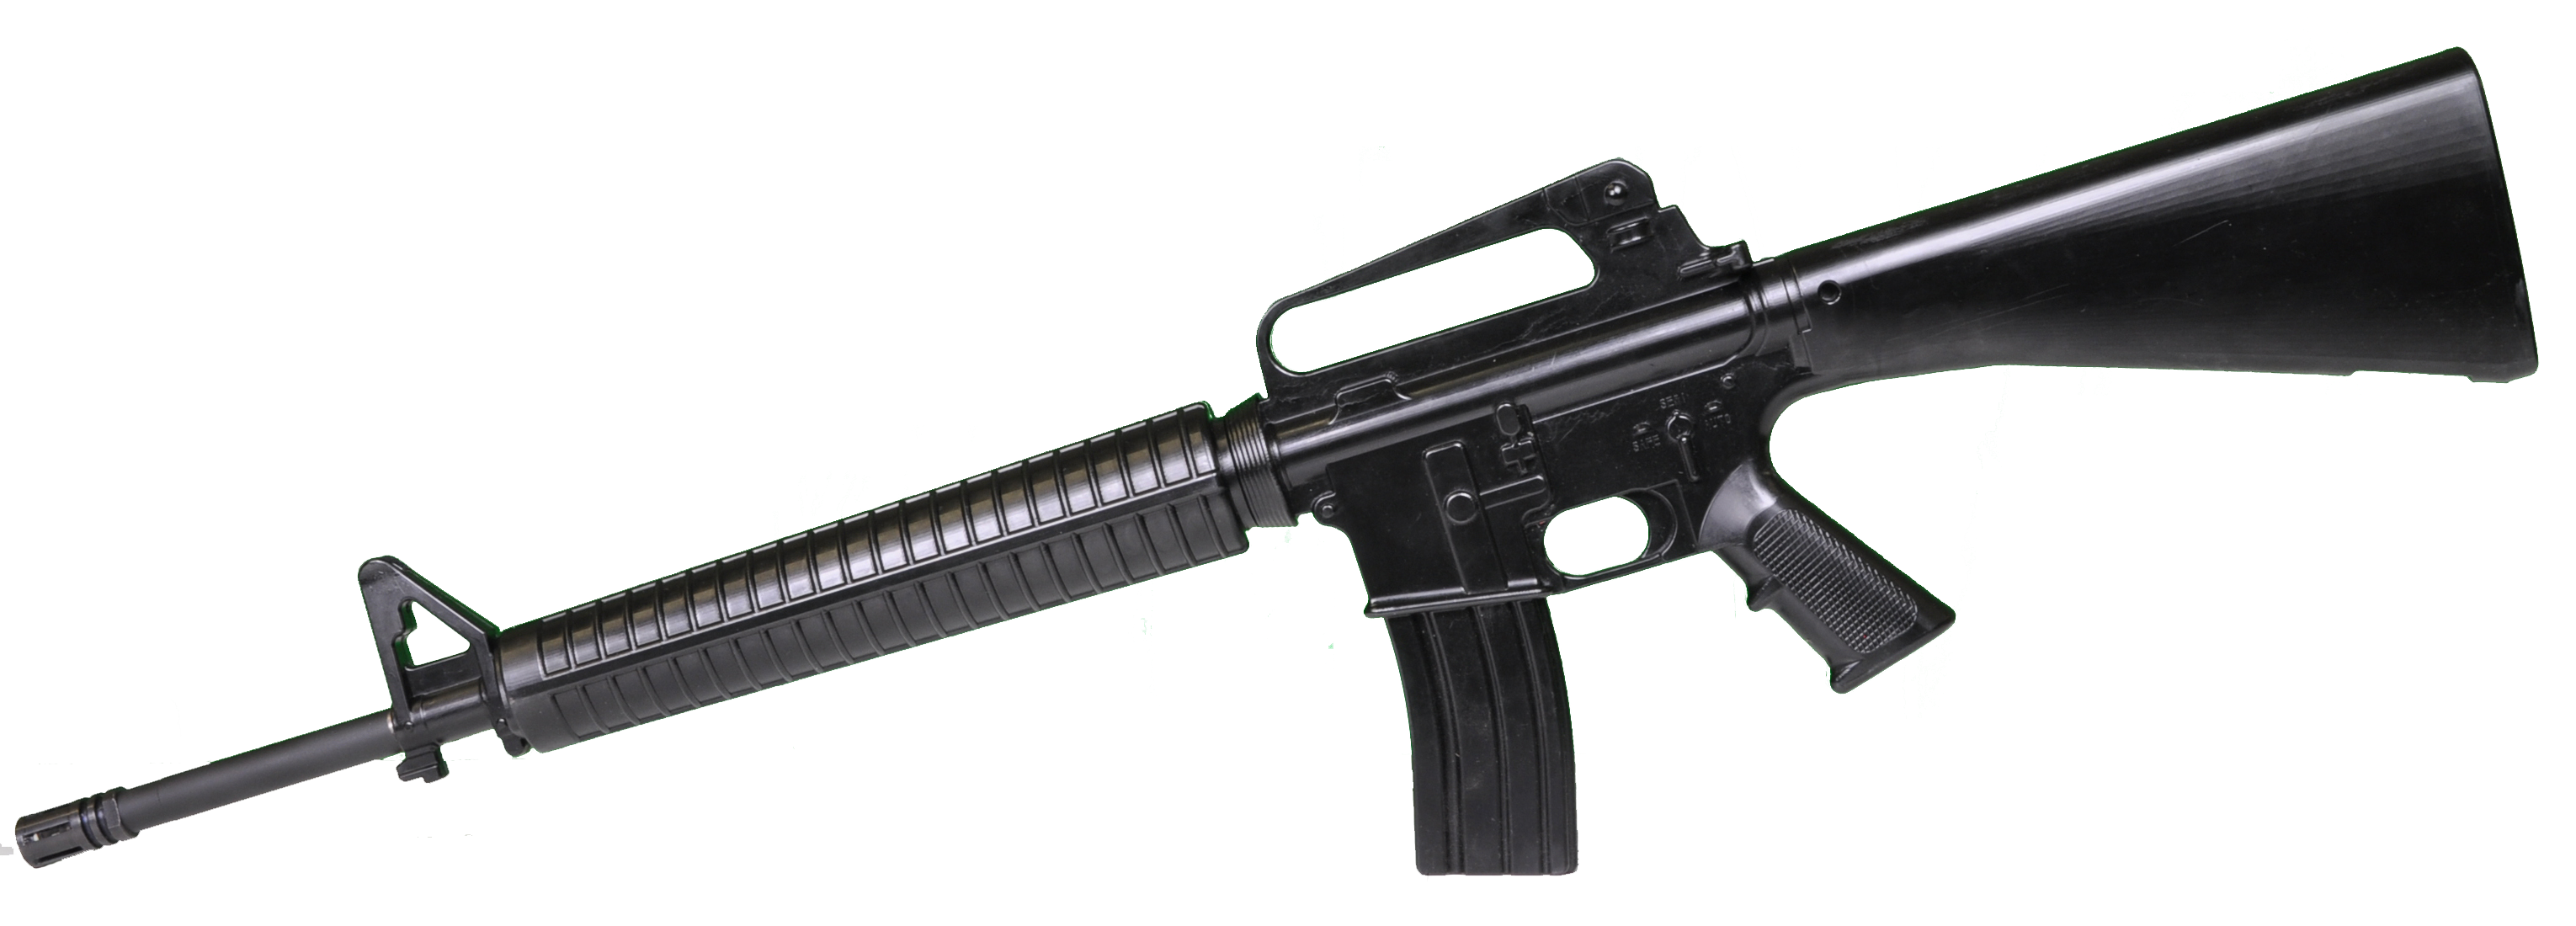 Black Assault Rifle